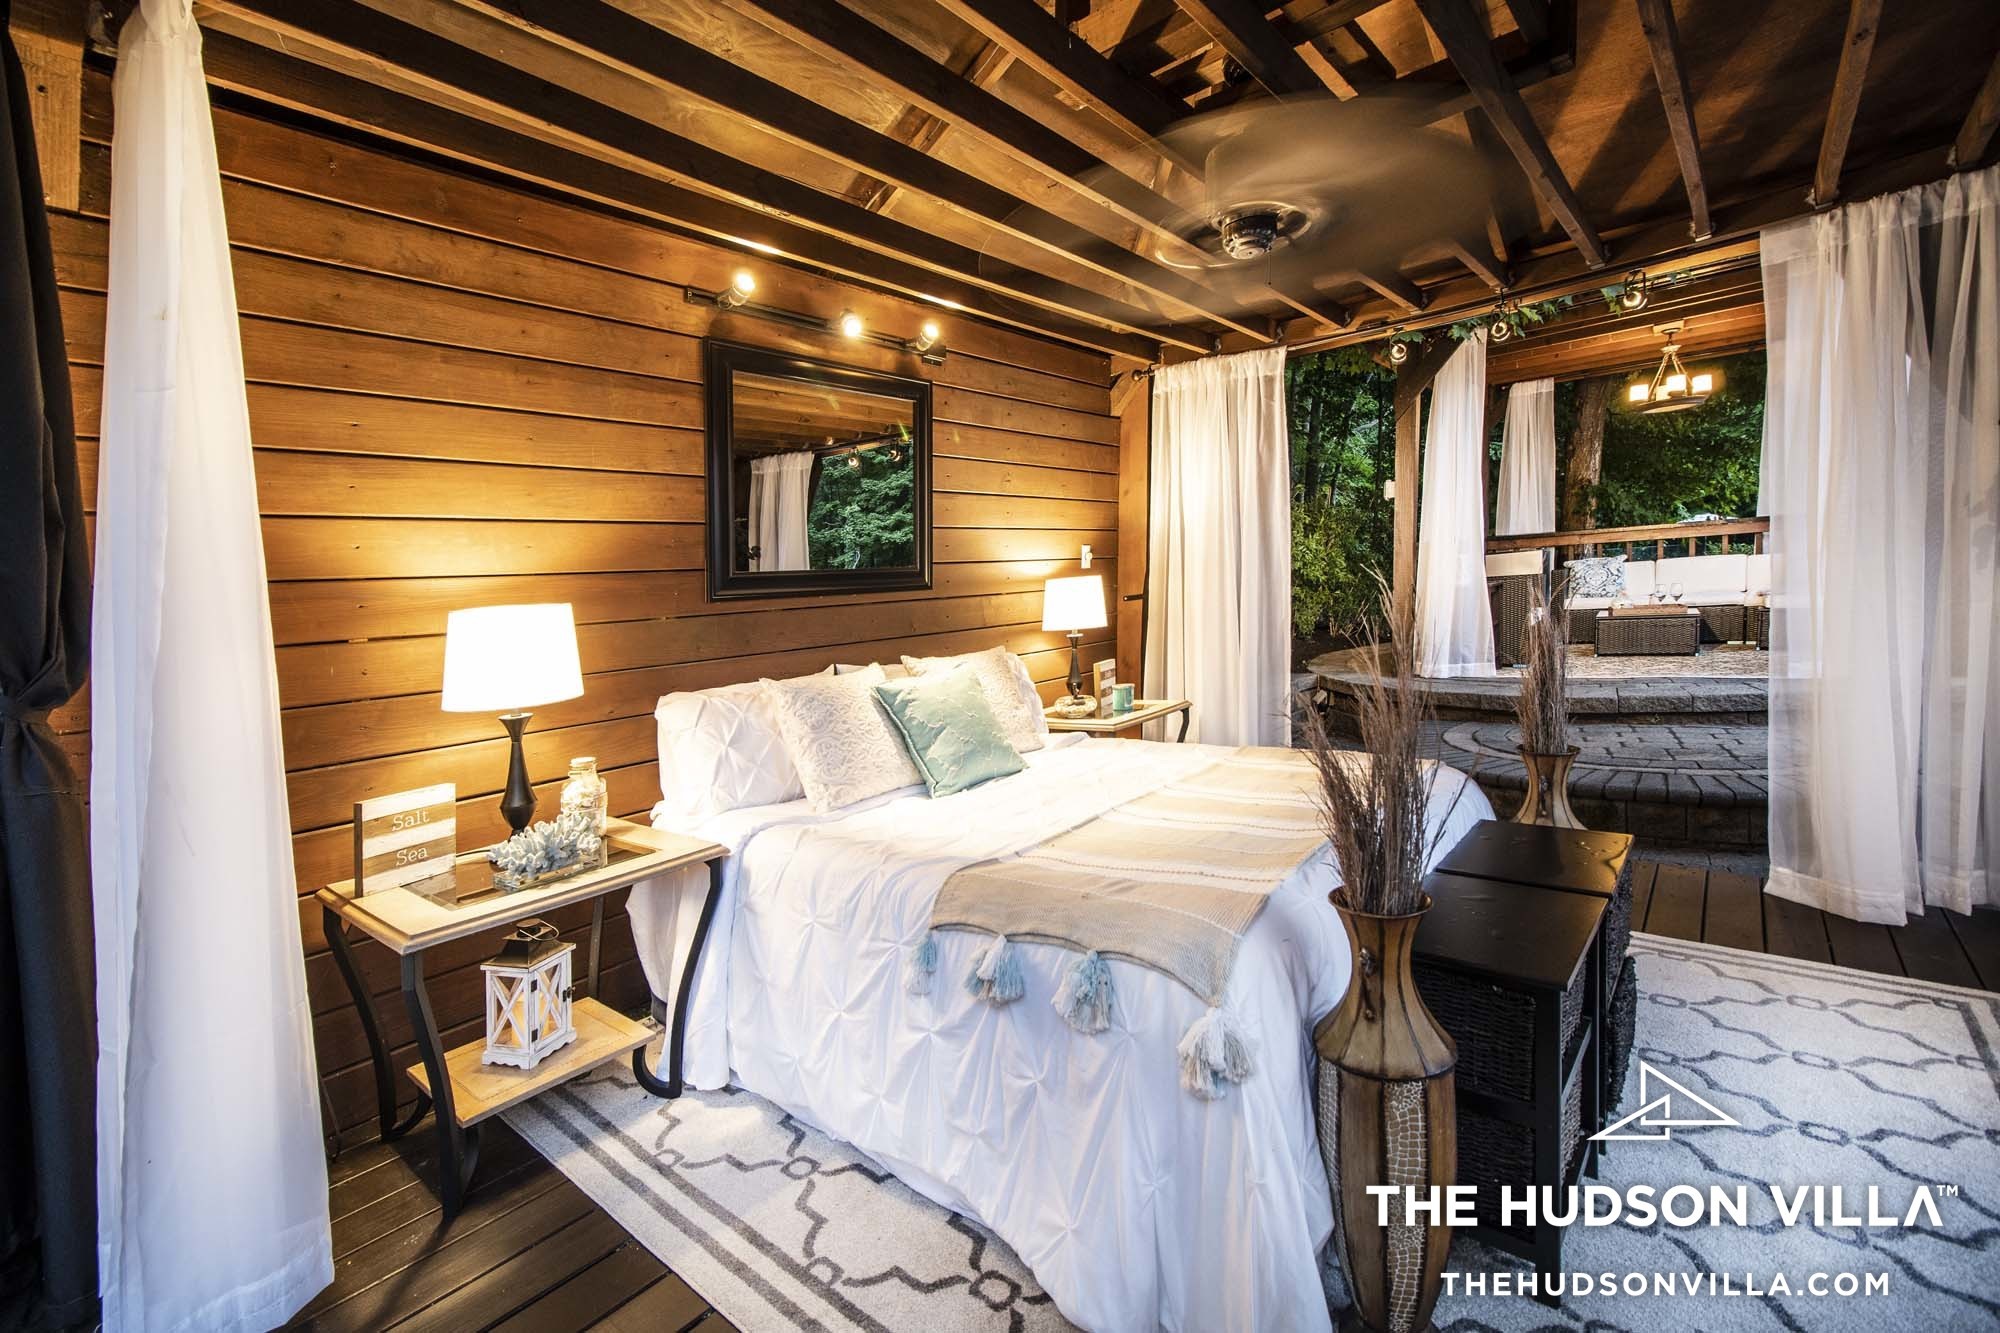 The Hudson Villa - Luxury Hudson Valley Villa for Sale in Chester, NY